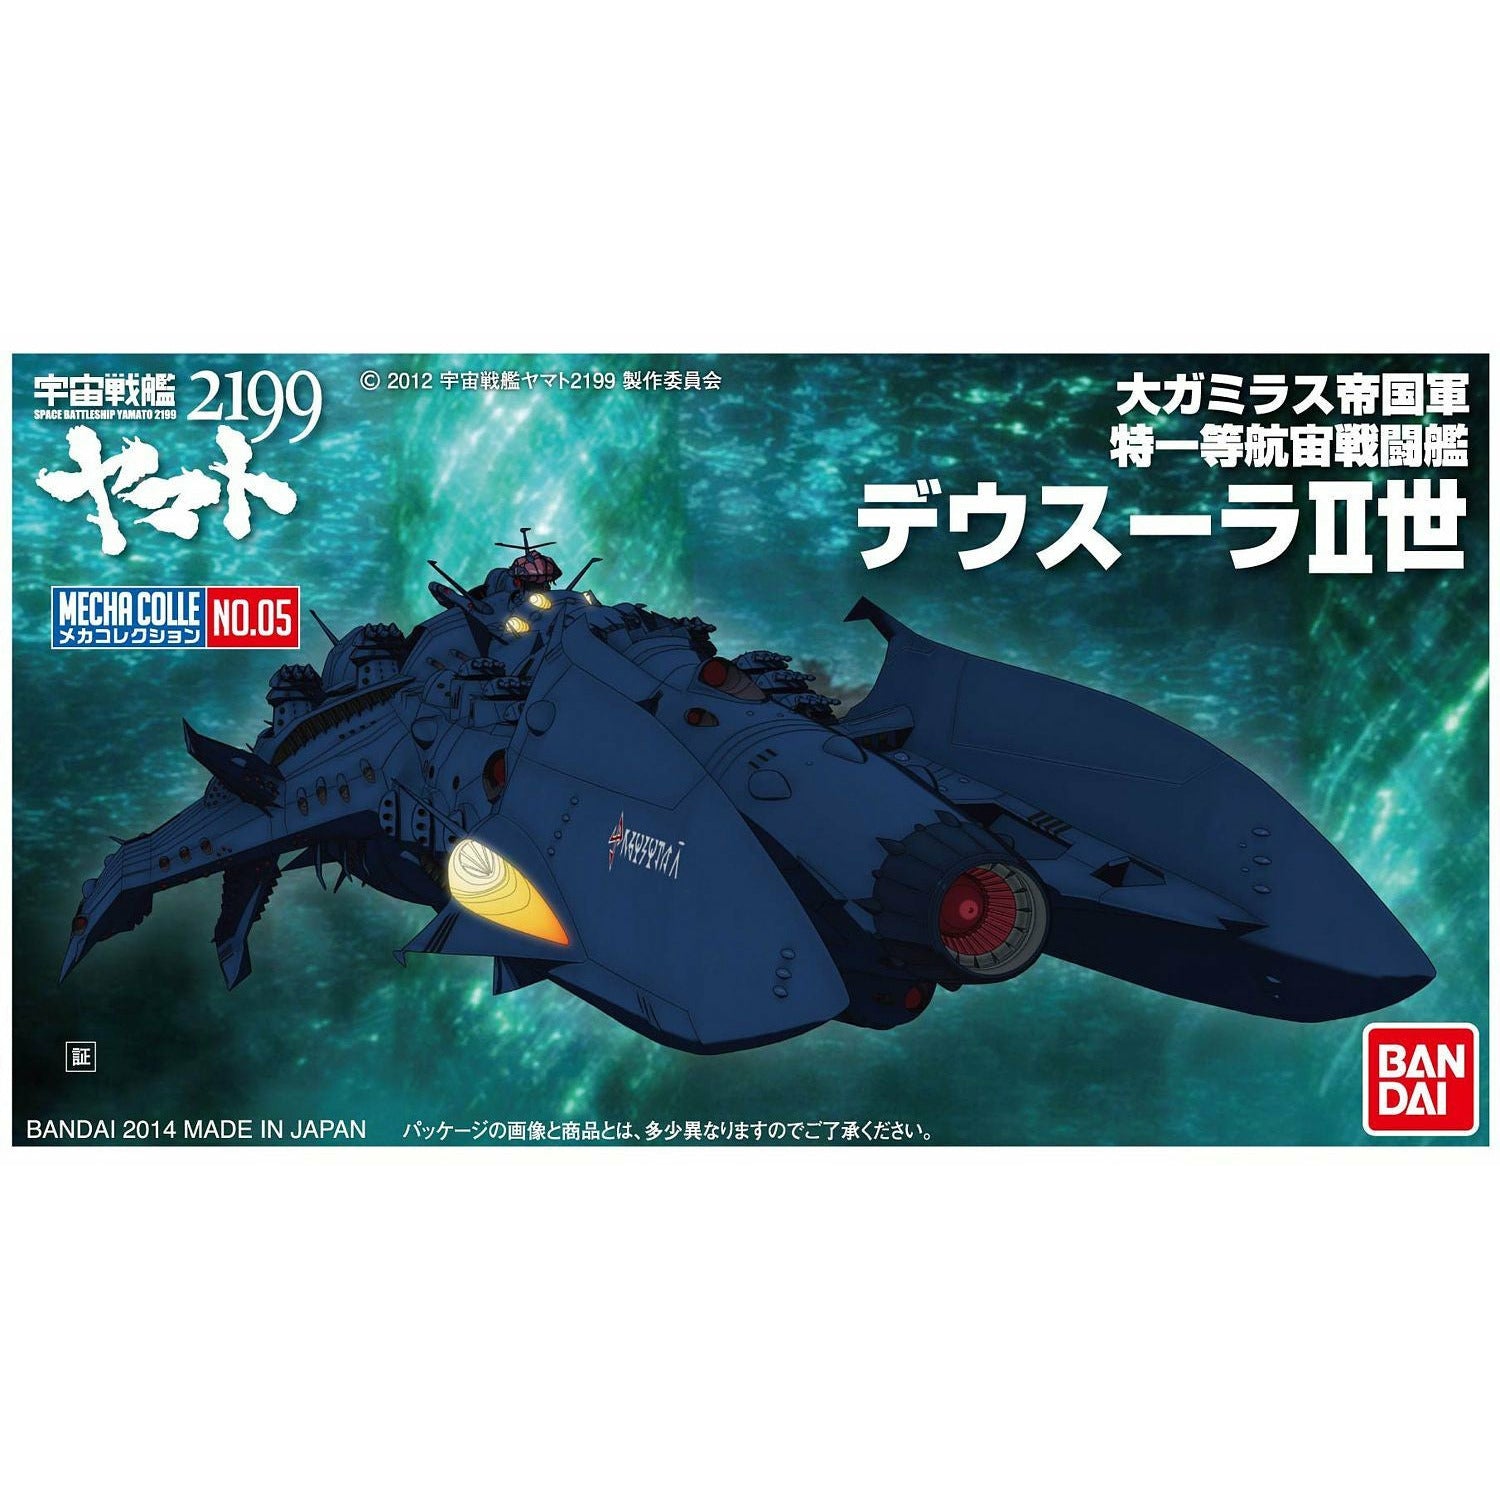 Dessula II #05 Star Blazers Mecha Collection #2272635 Space Battleship Yamato 2199 by Bandai